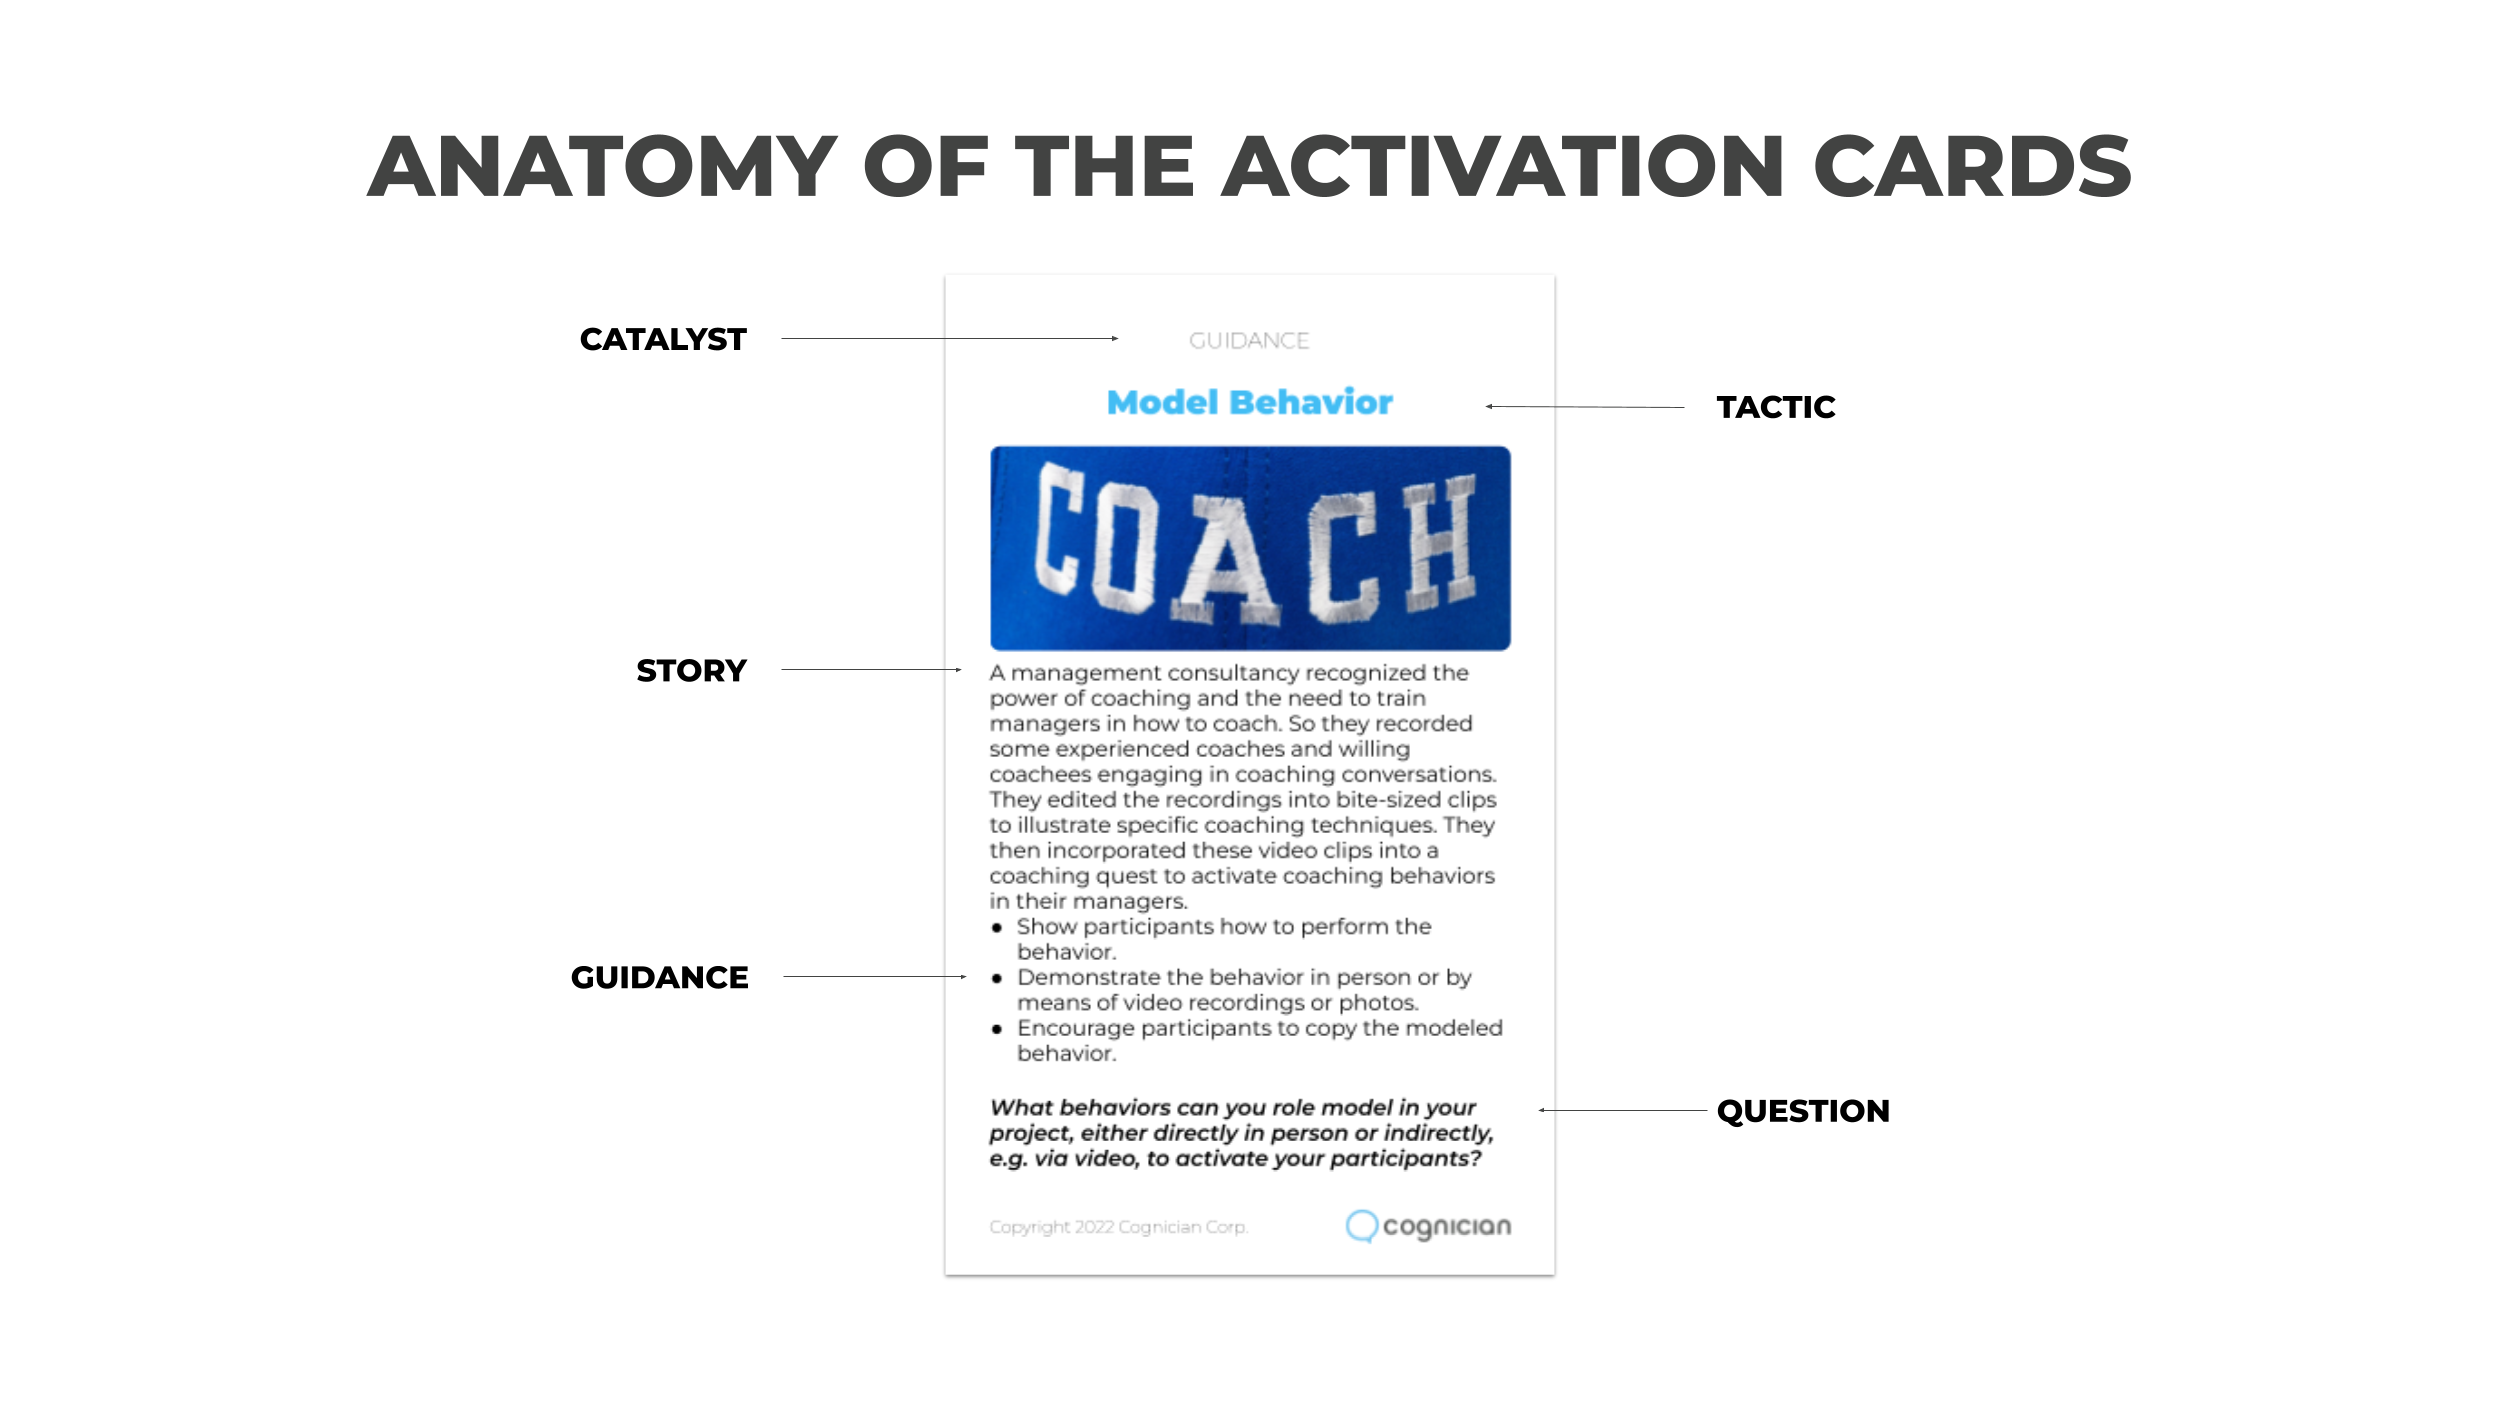 220906-activation-card-anatomy